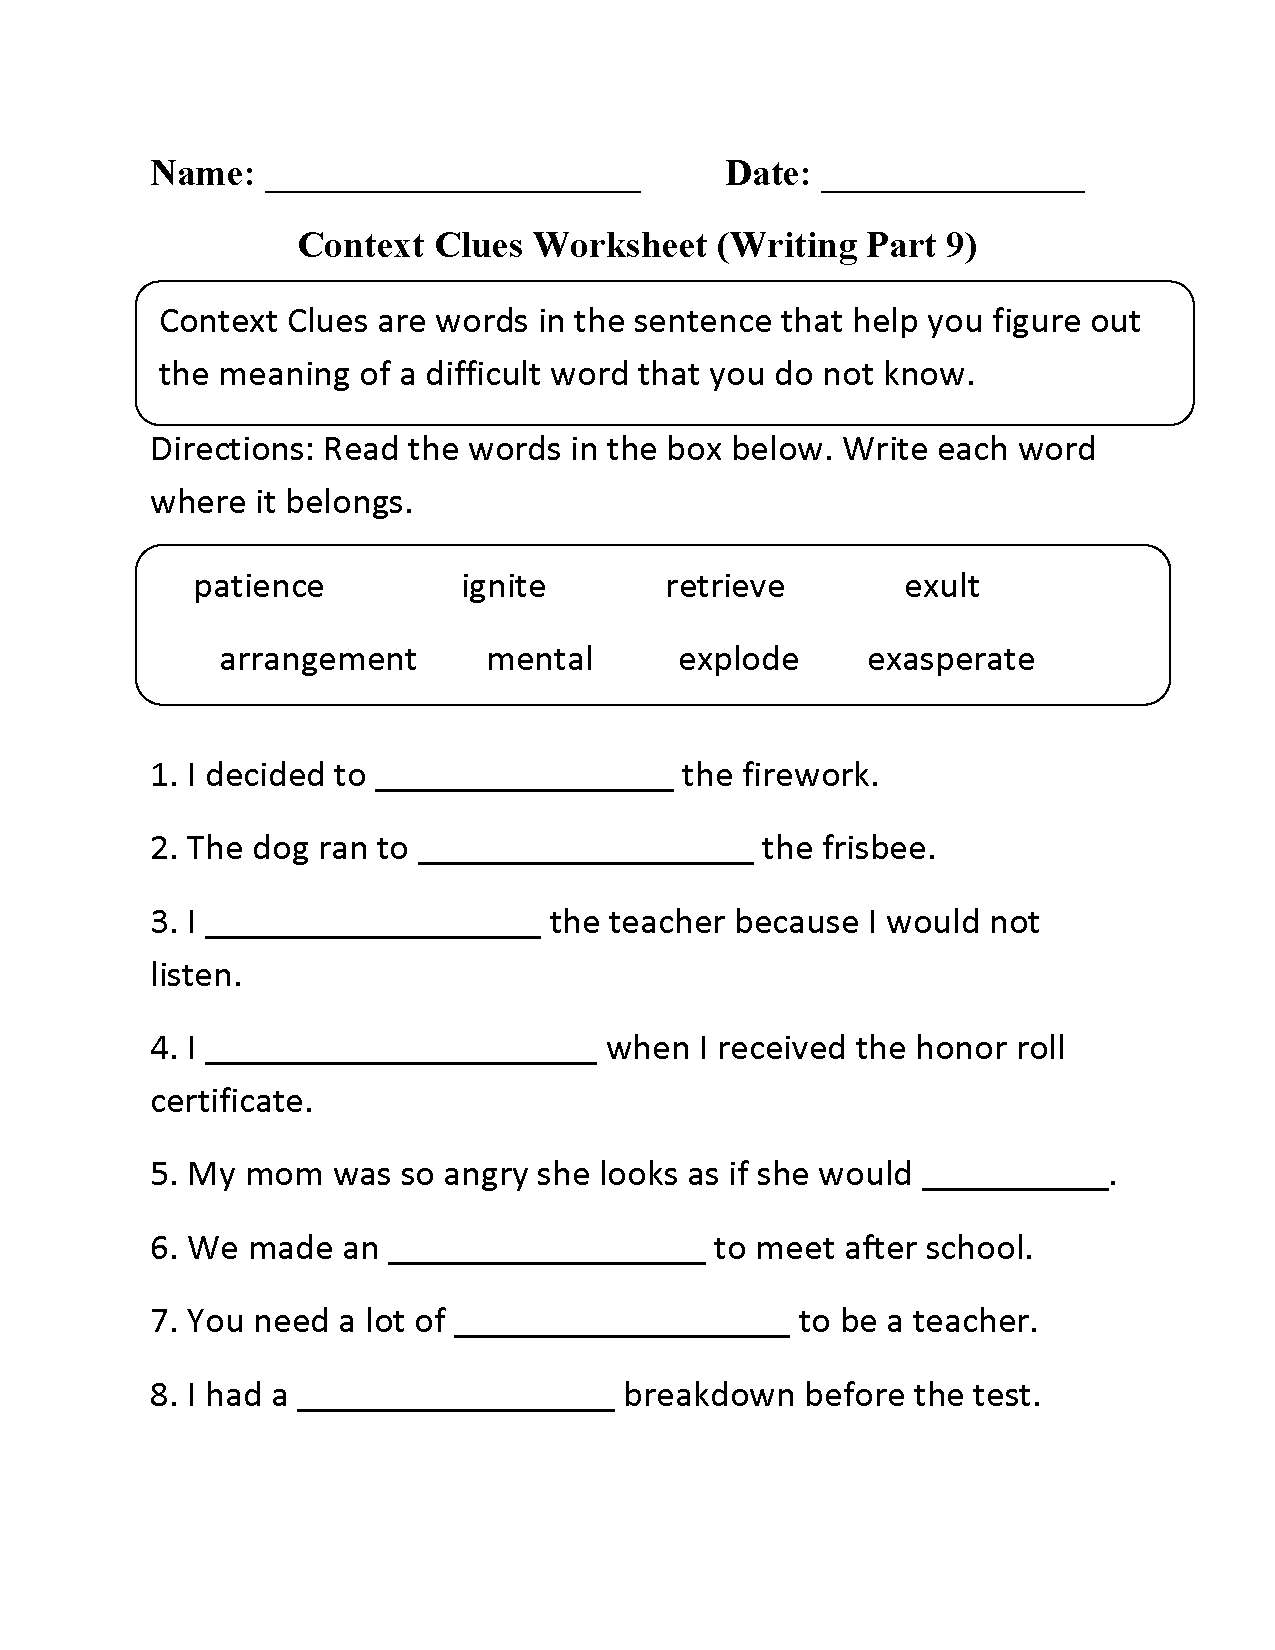 Printables Context Clues Worksheet context clues worksheets worksheet writing part 9 intermediate